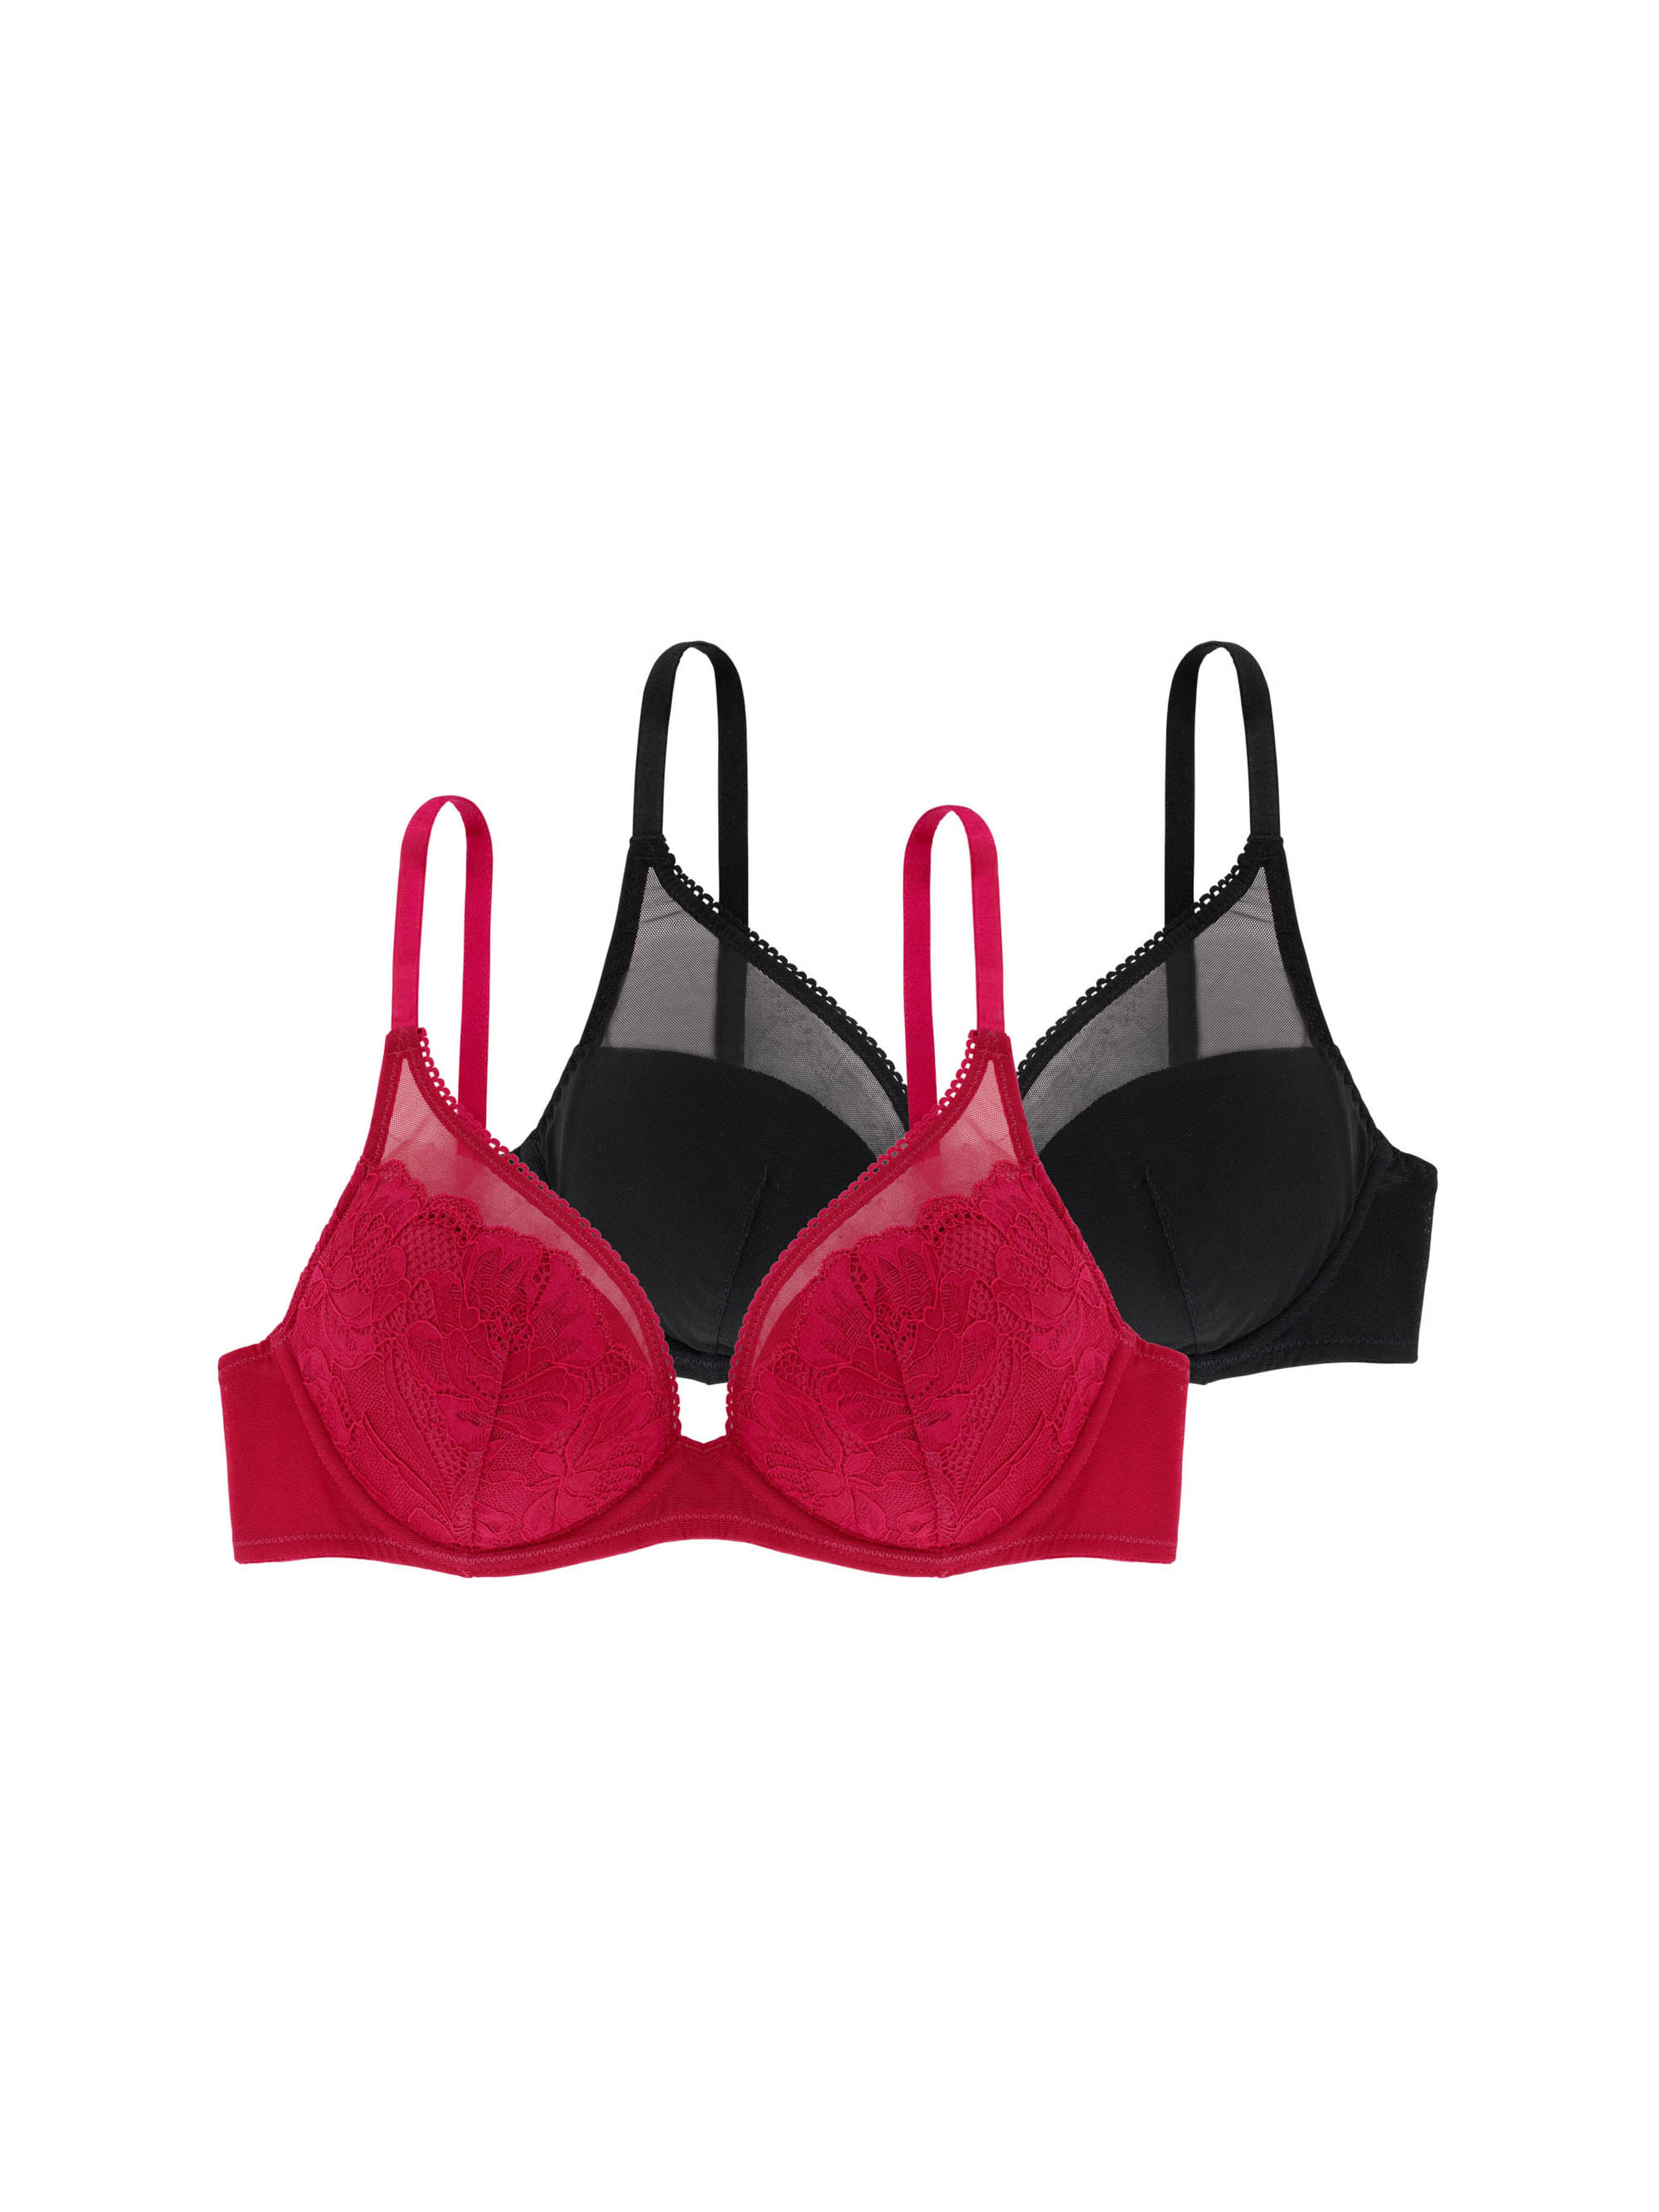 Buy Affinity Women's Padded Bra (Rio Red Skin, 36B) at